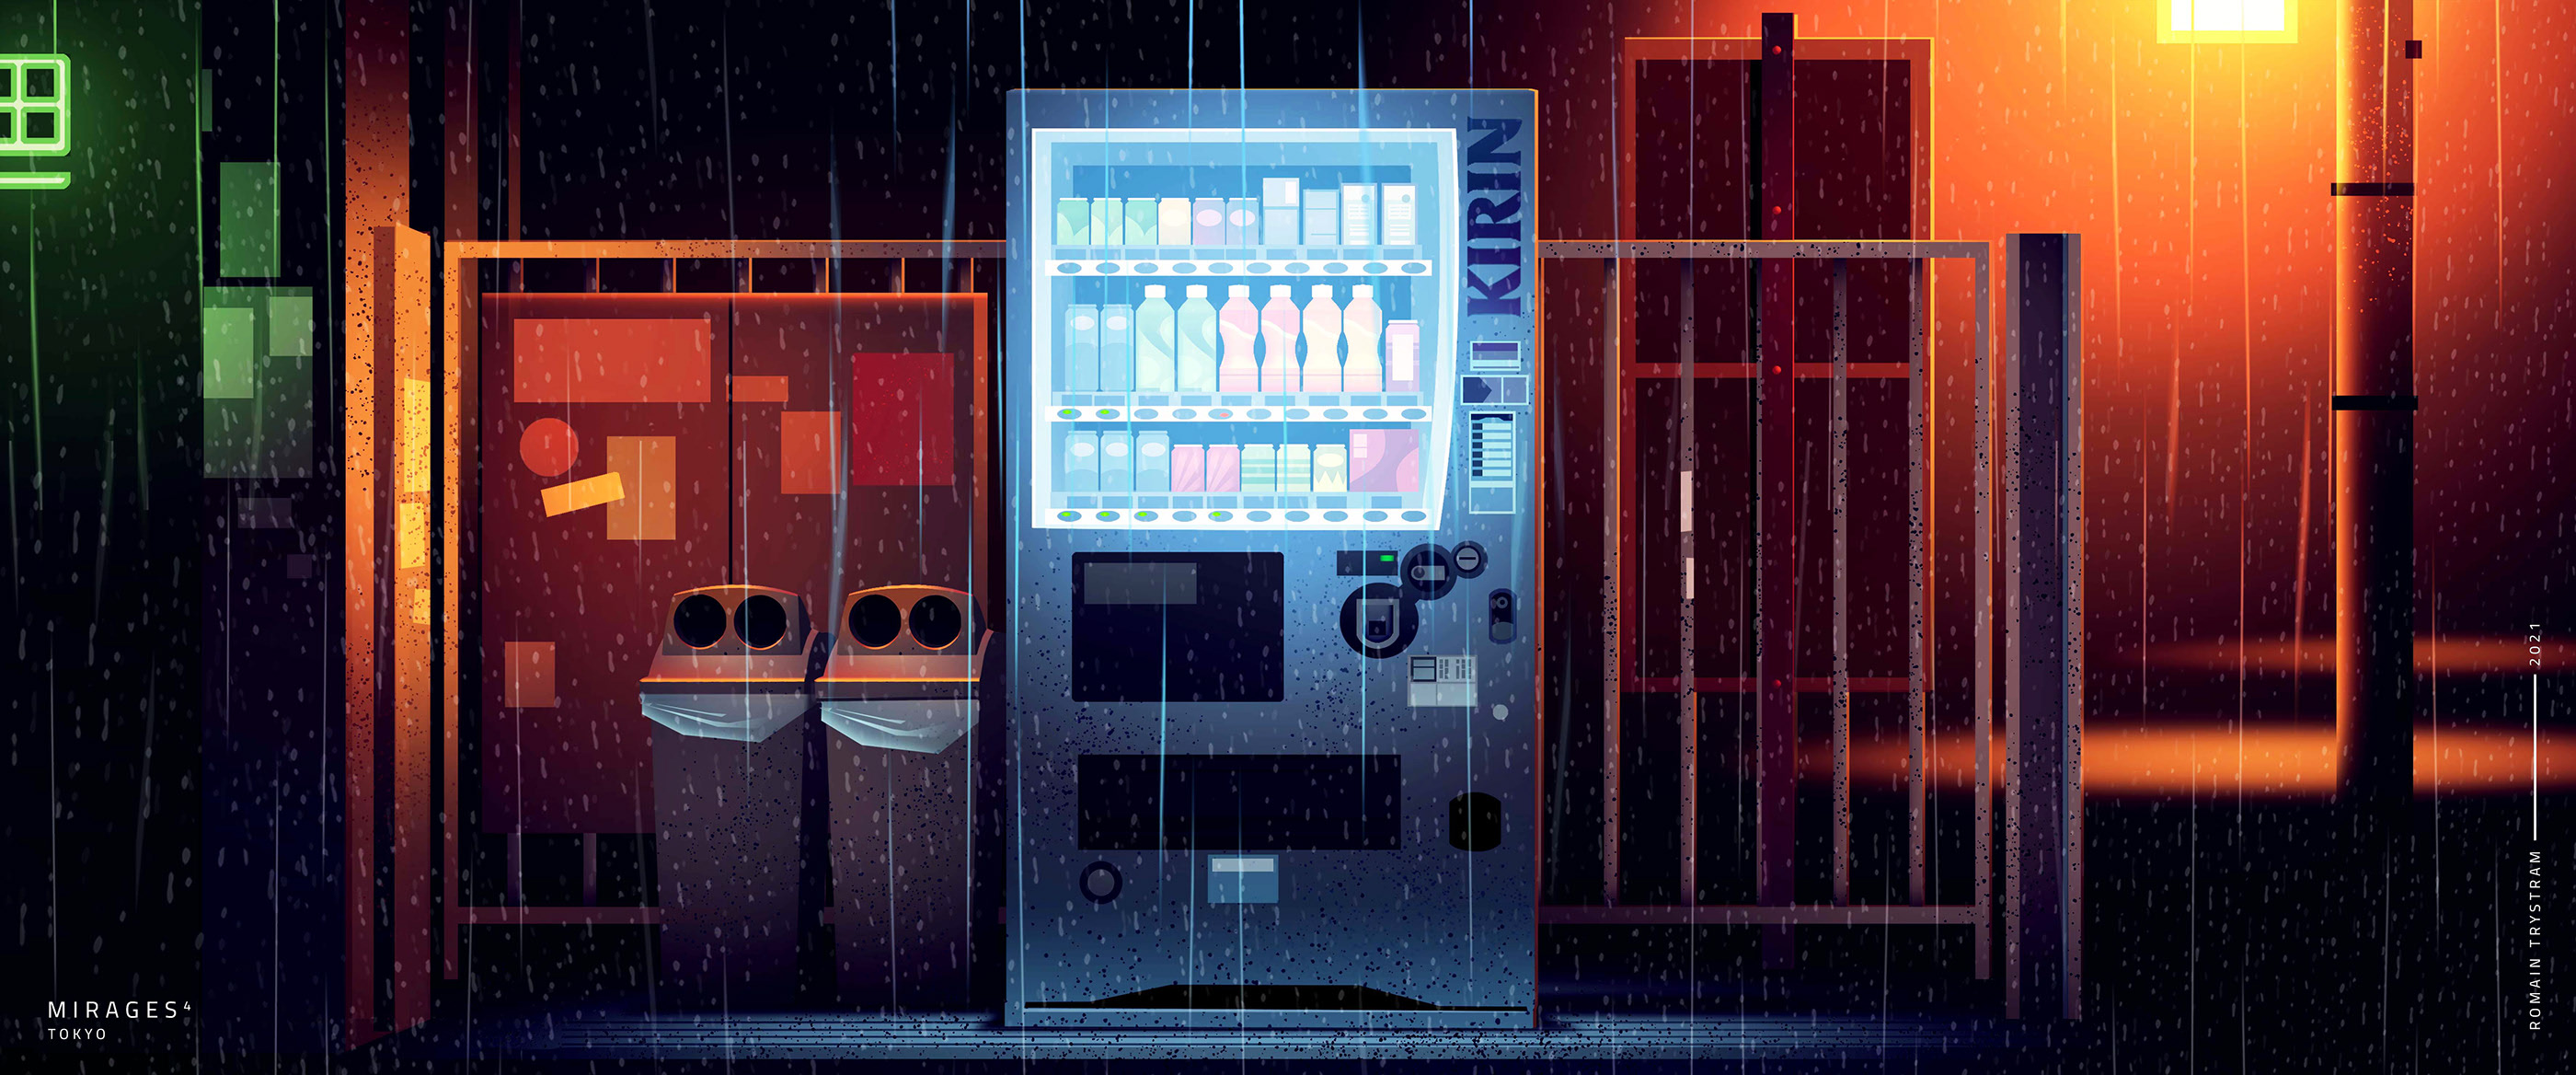 General 2800x1168 Romain Trystram digital art neon lights rain Tokyo vending machine trash bin